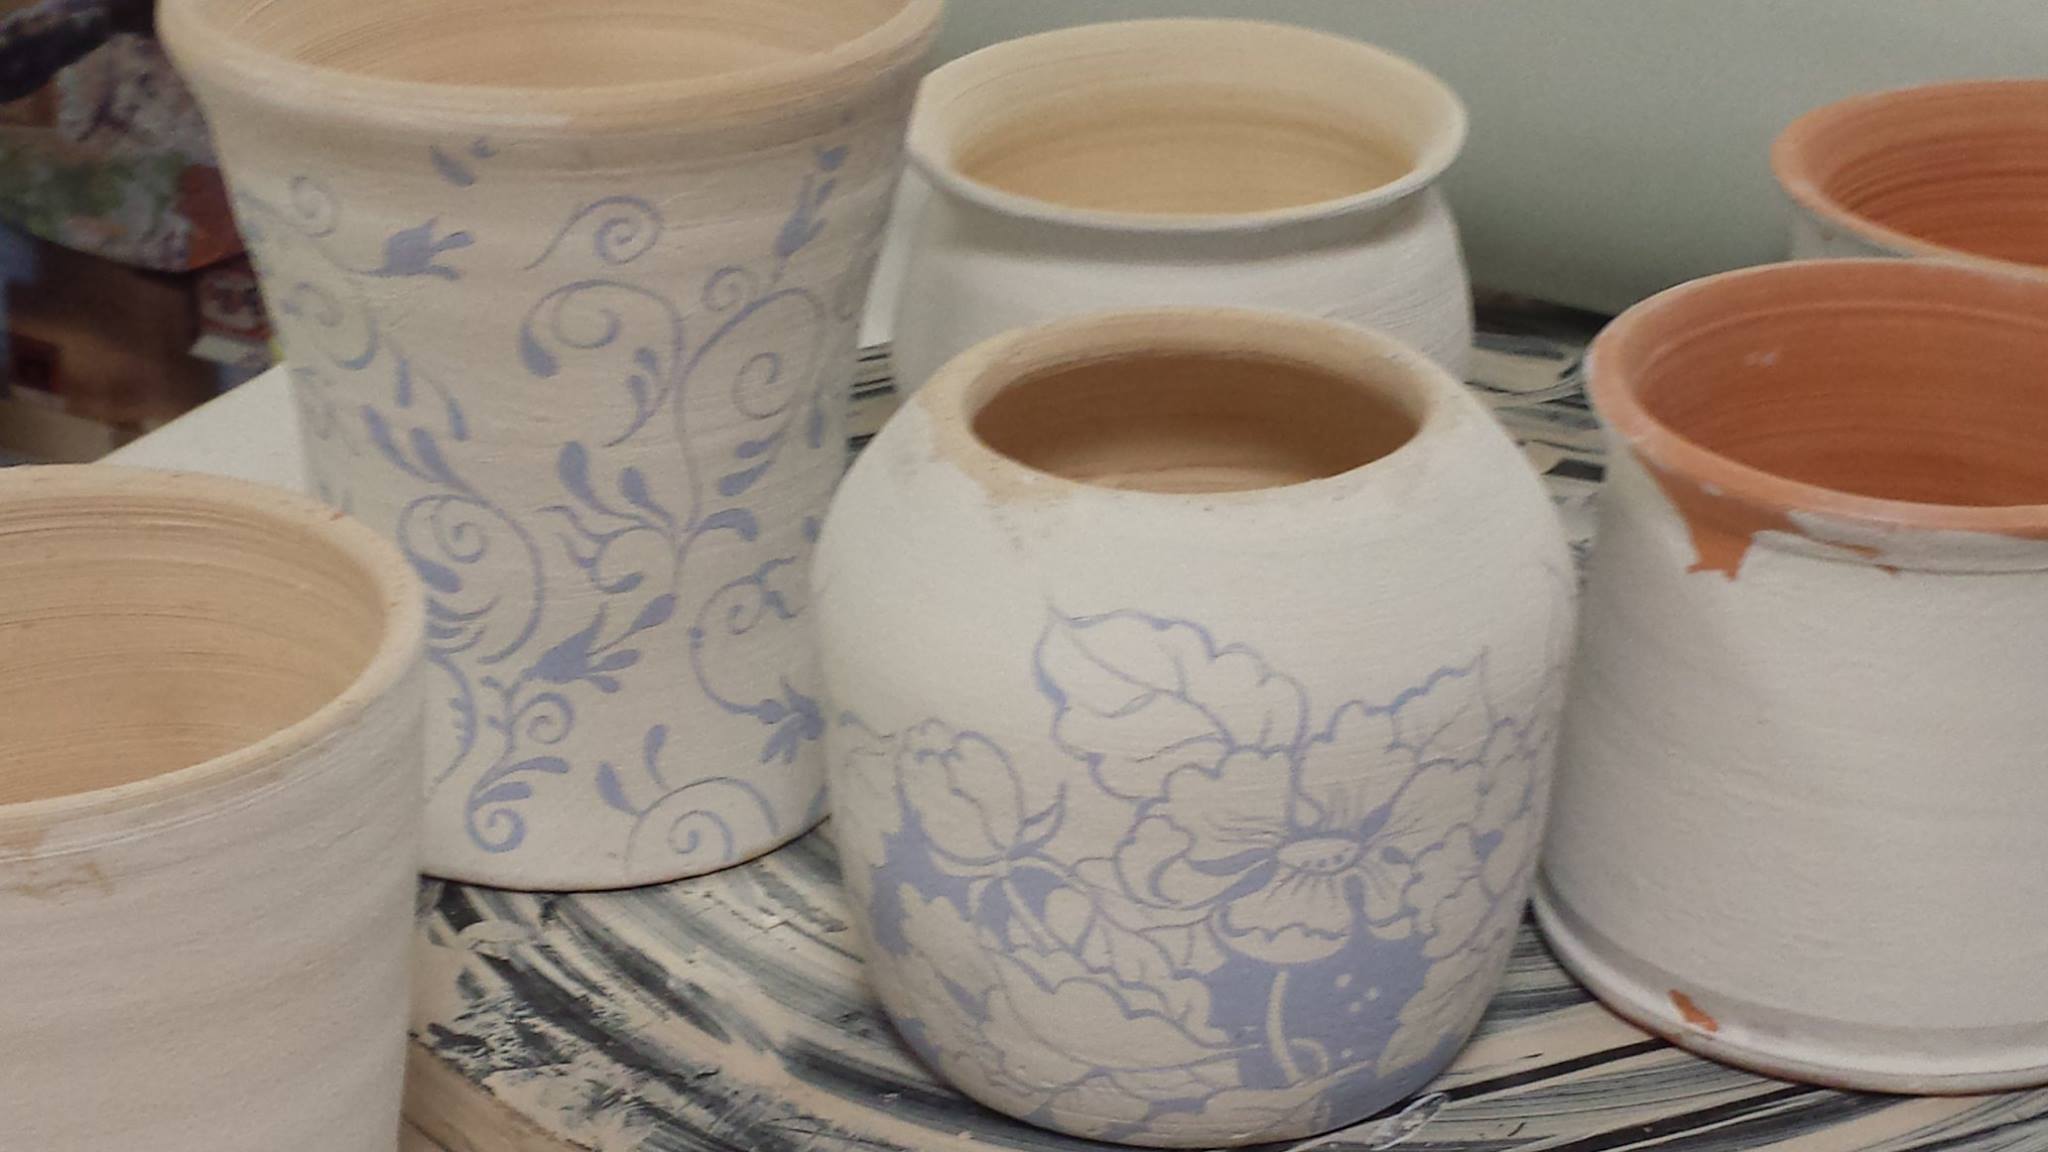 michelle 's ceramics .jpg